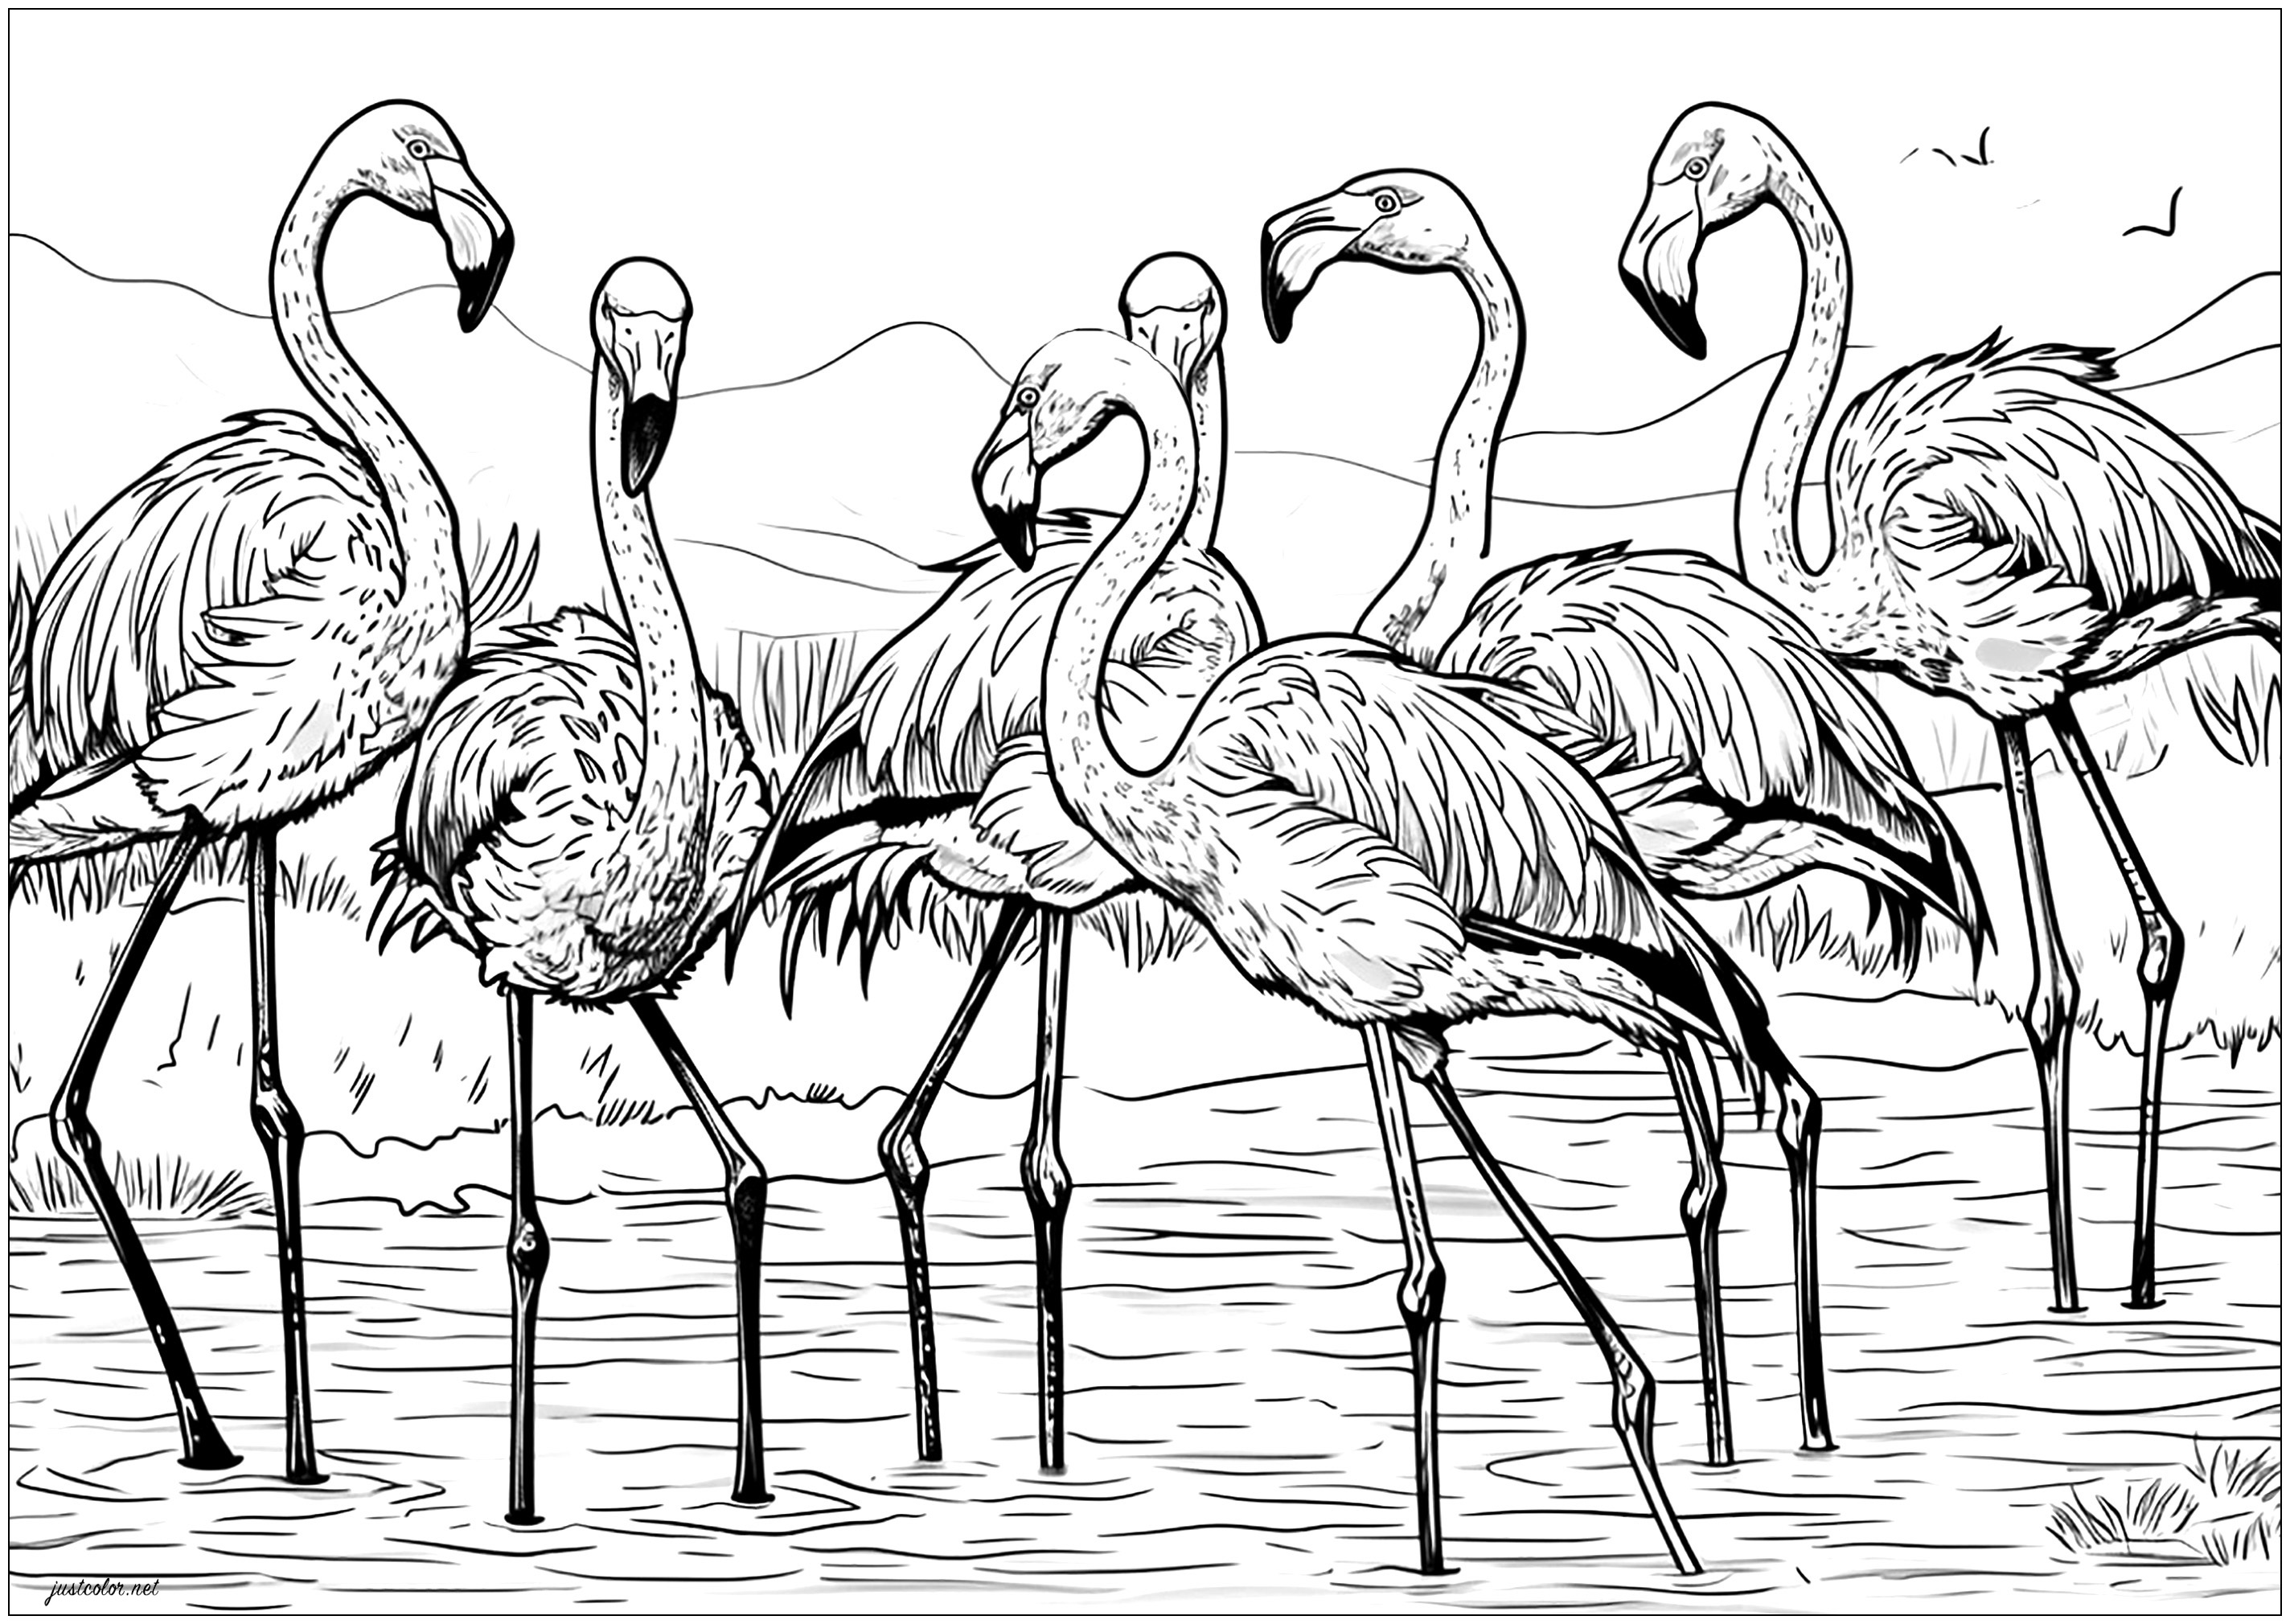 Flamingo family - 2